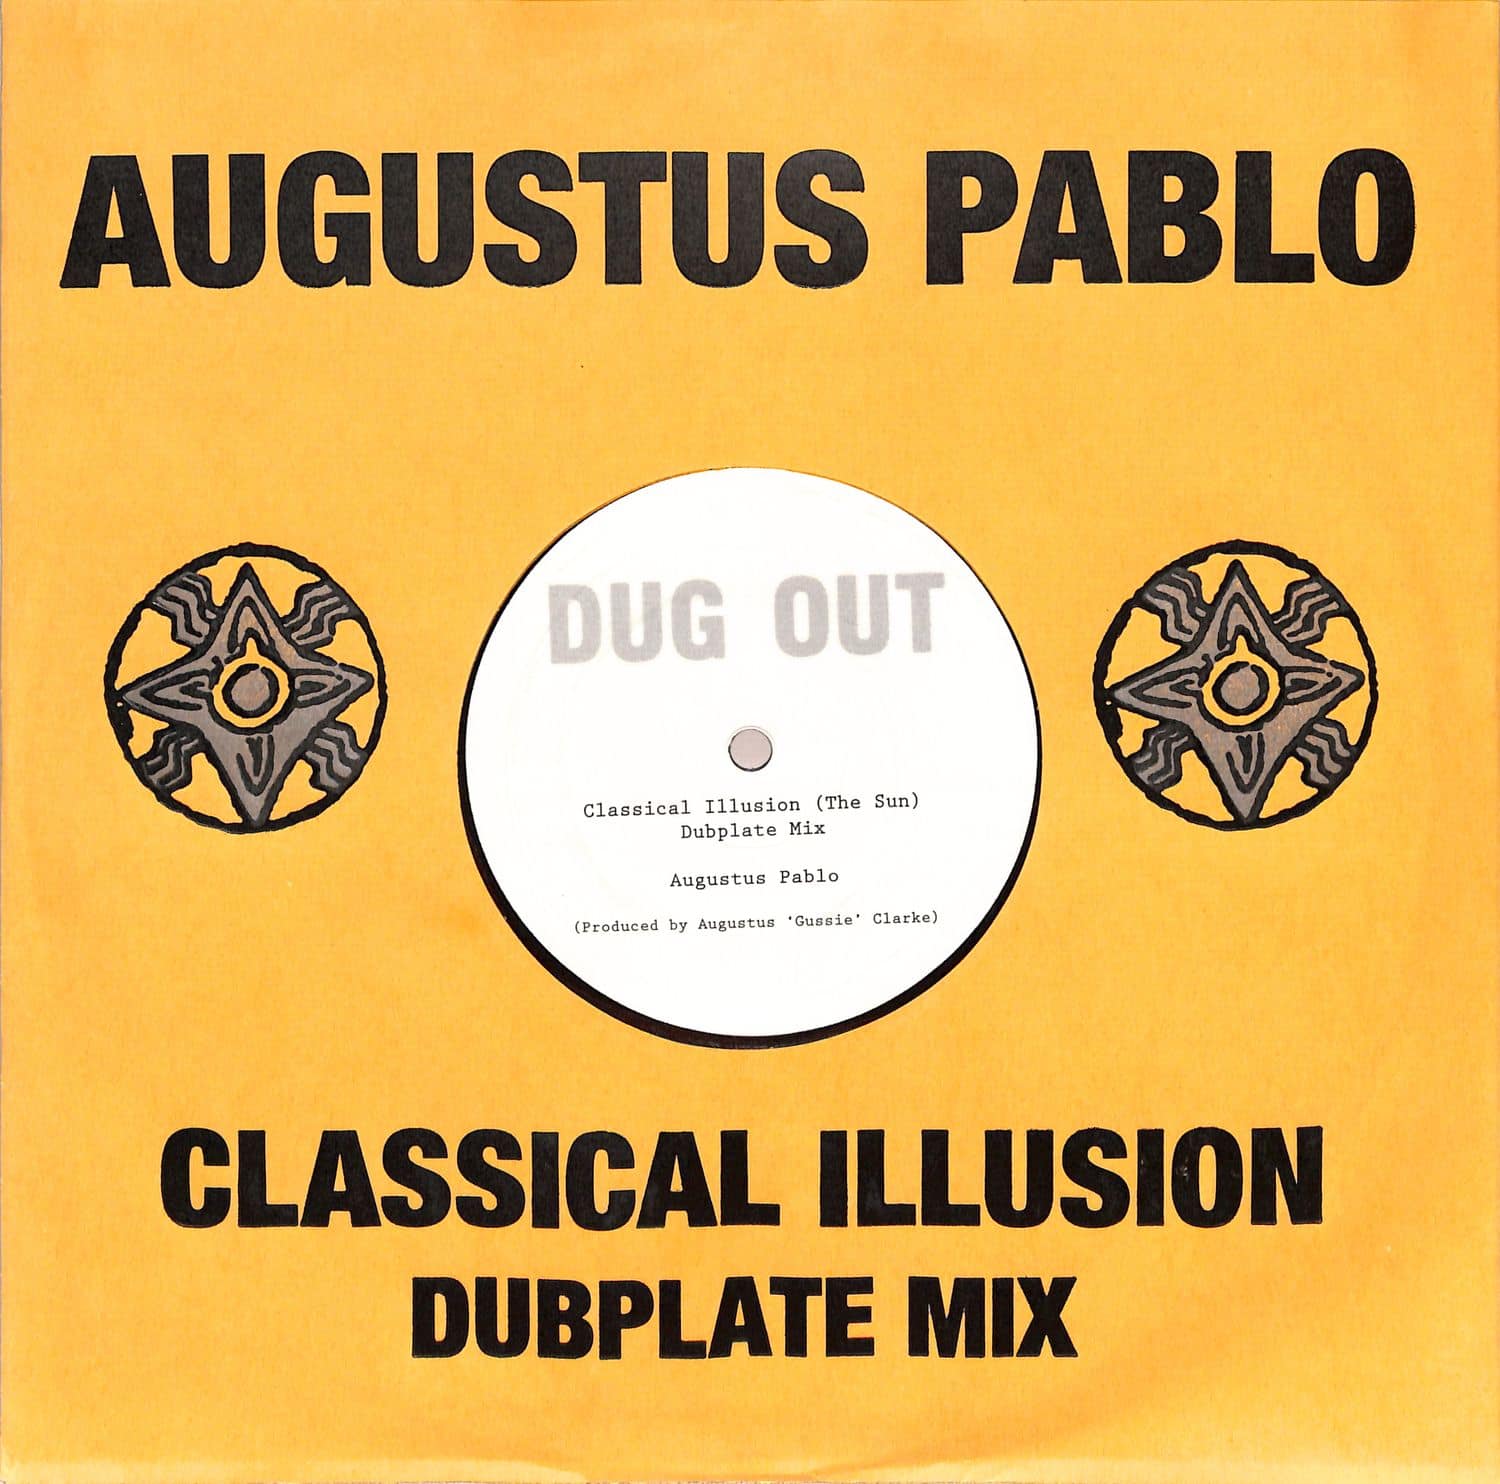 Augustus Pablo - THE SUN DUBPLATE MIX 